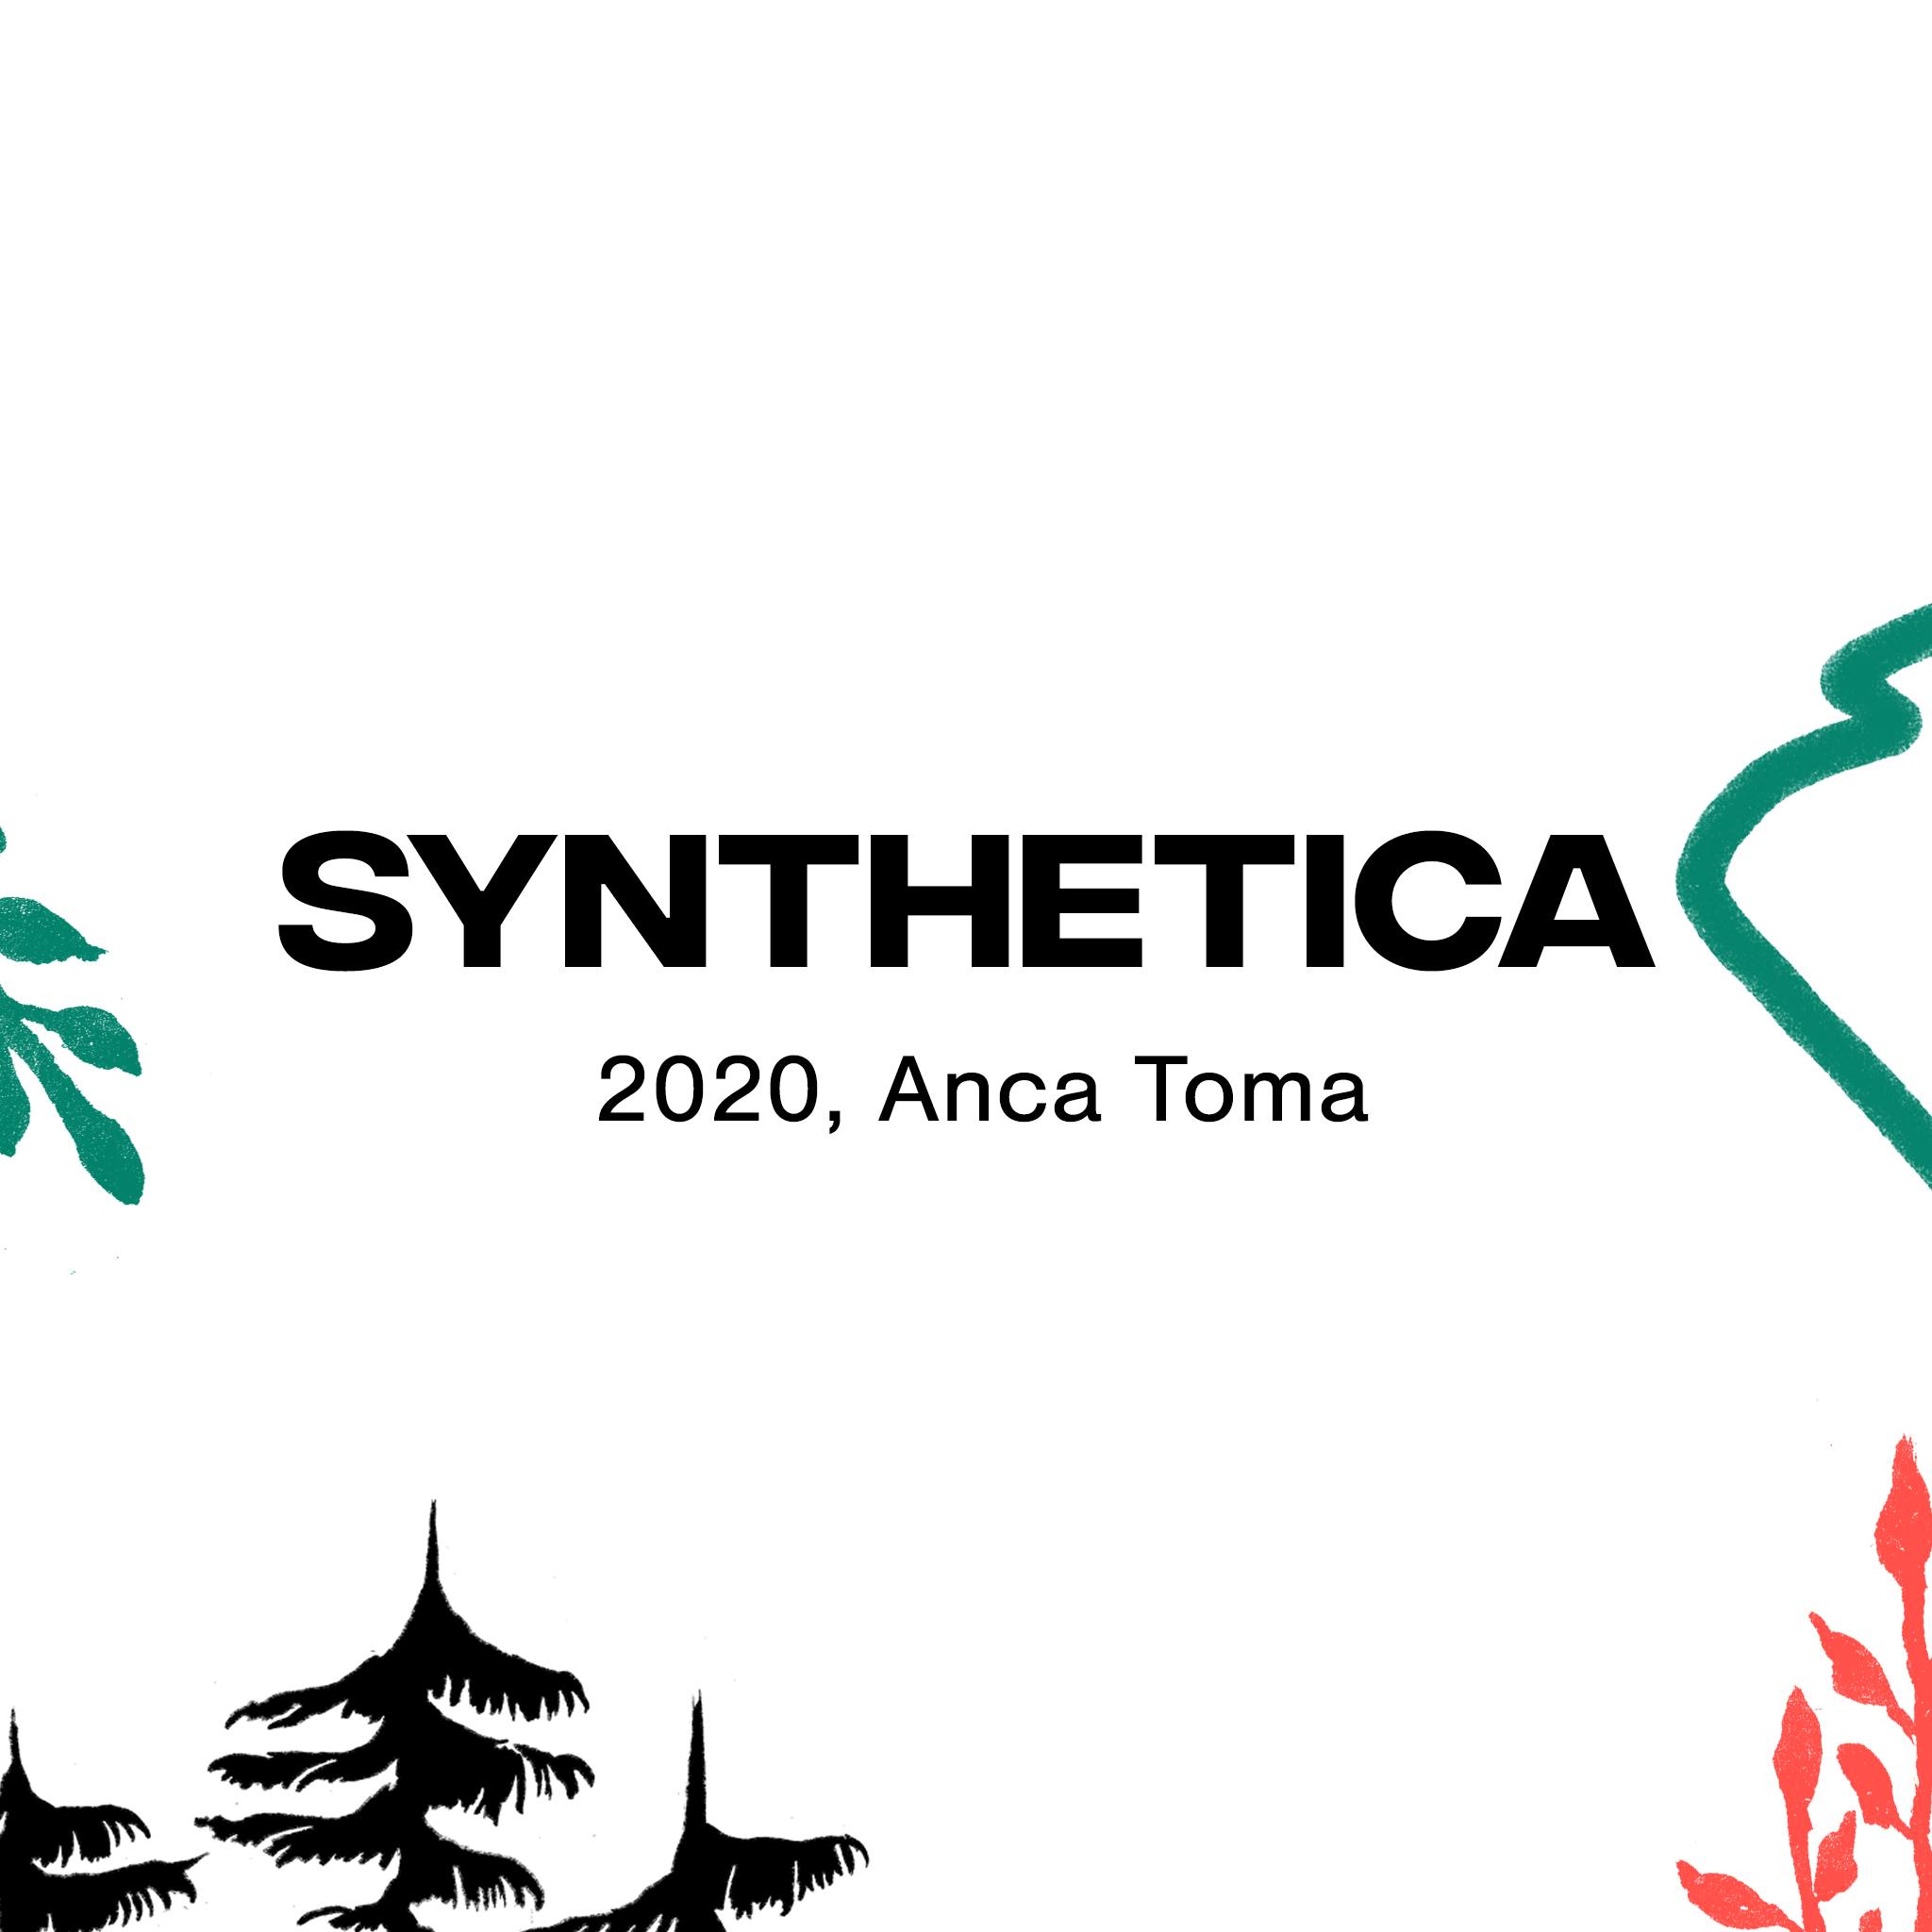 Synthetica